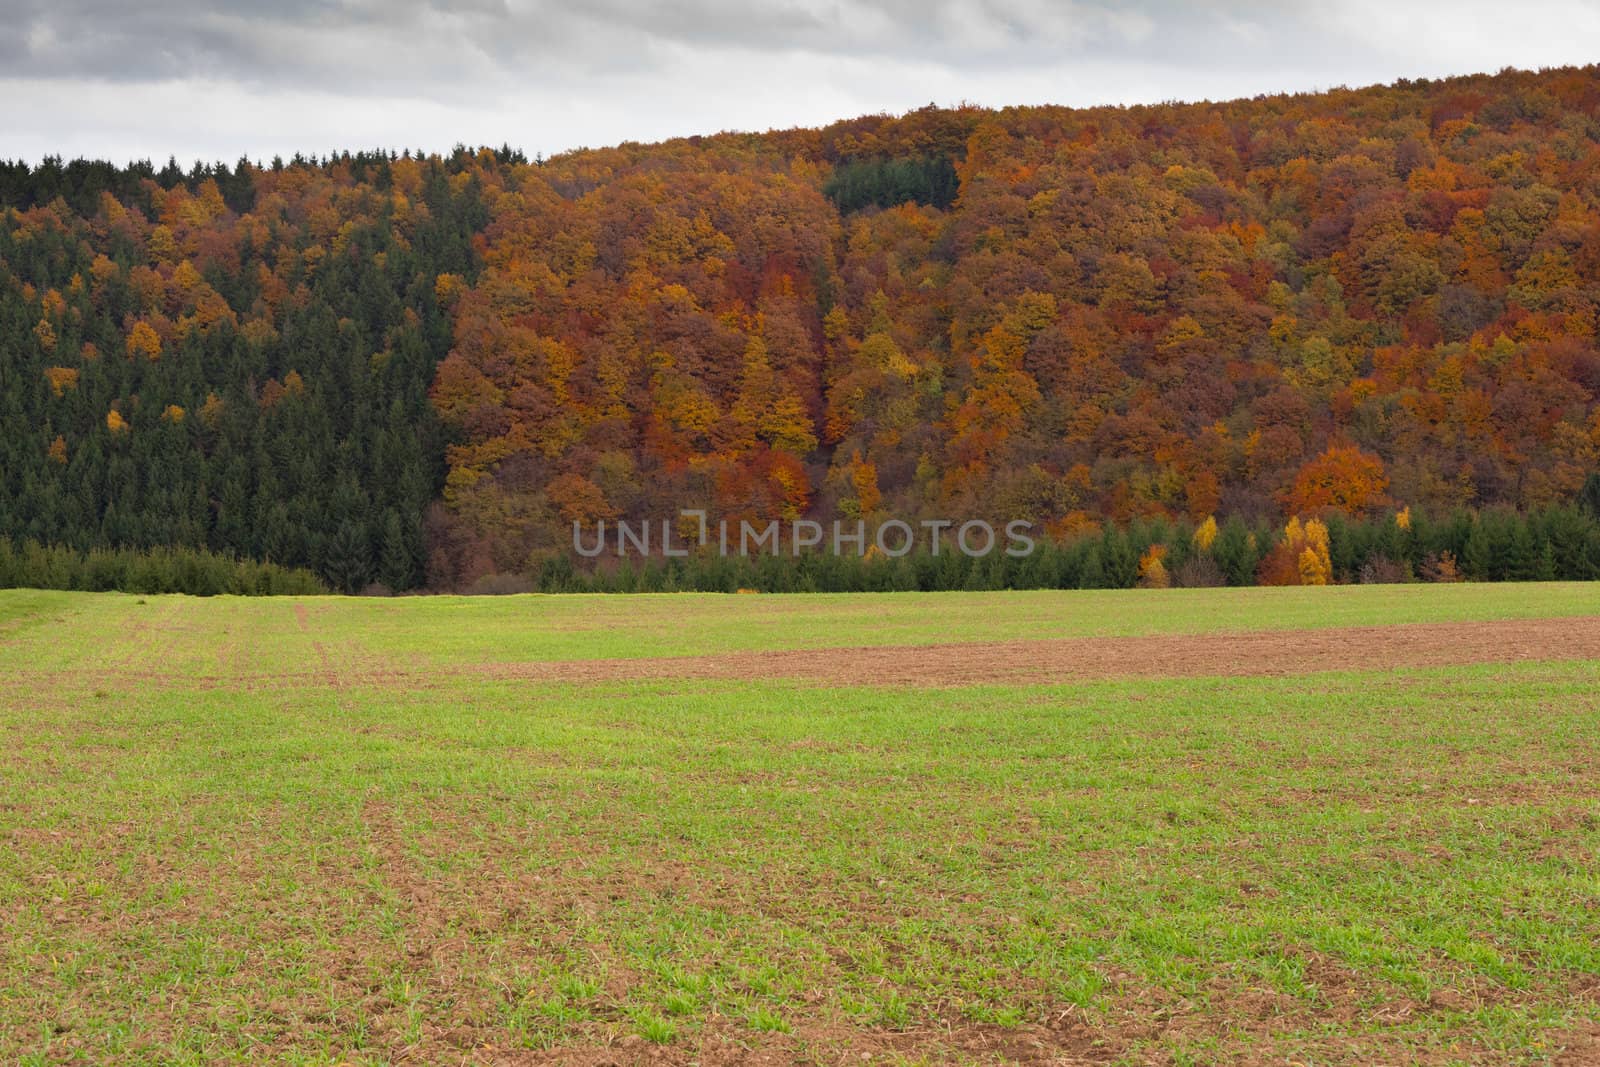 Farmland in Eifel region, Germany, with winter grain starting to grow in fall.